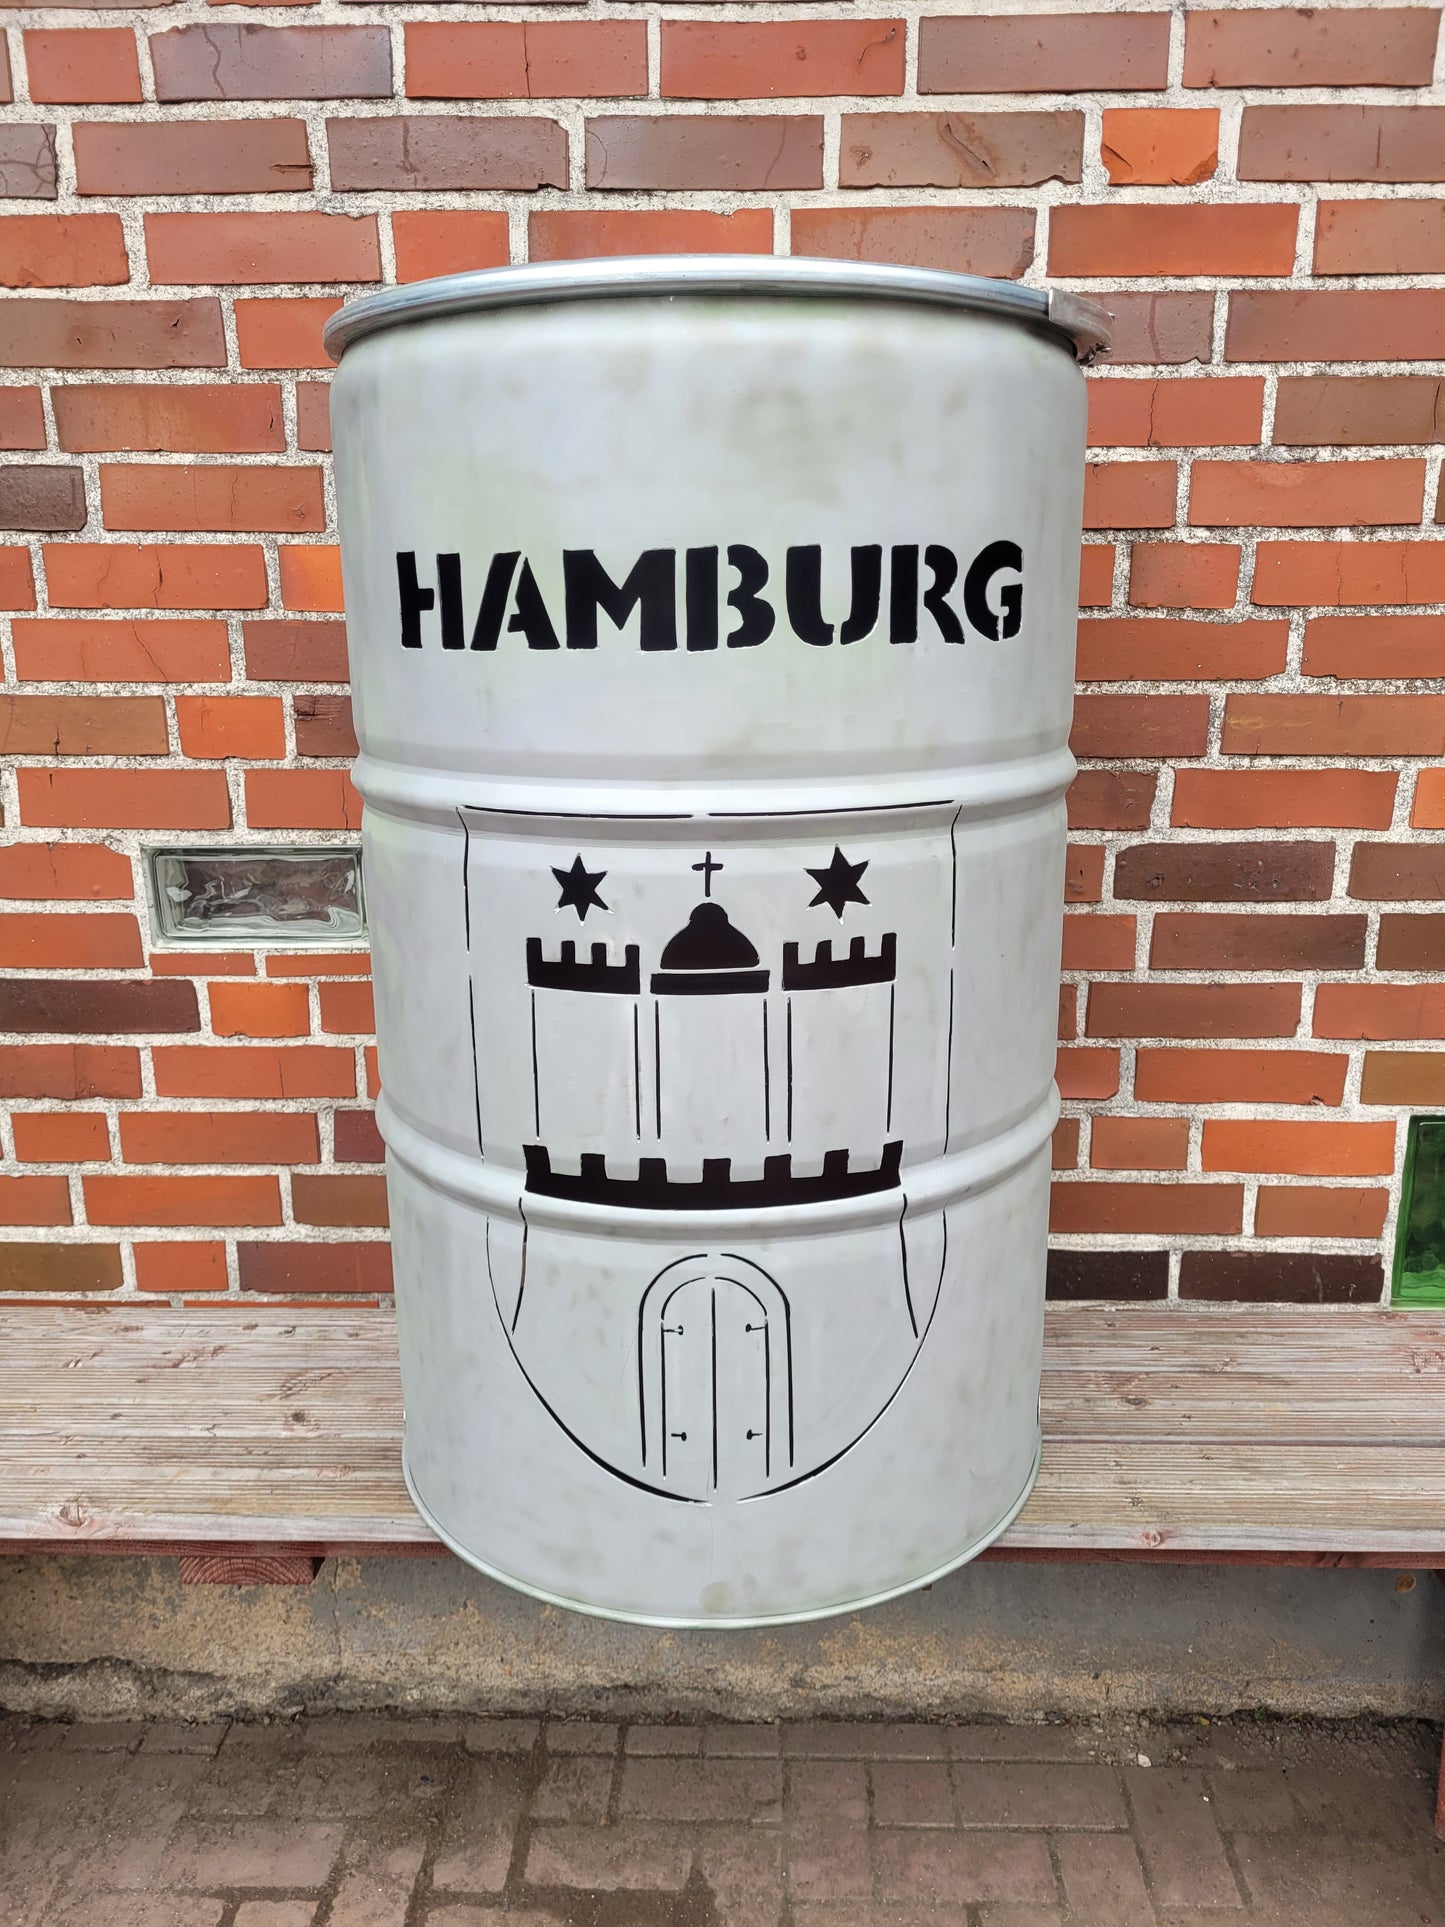 Fire barrel Hamburg